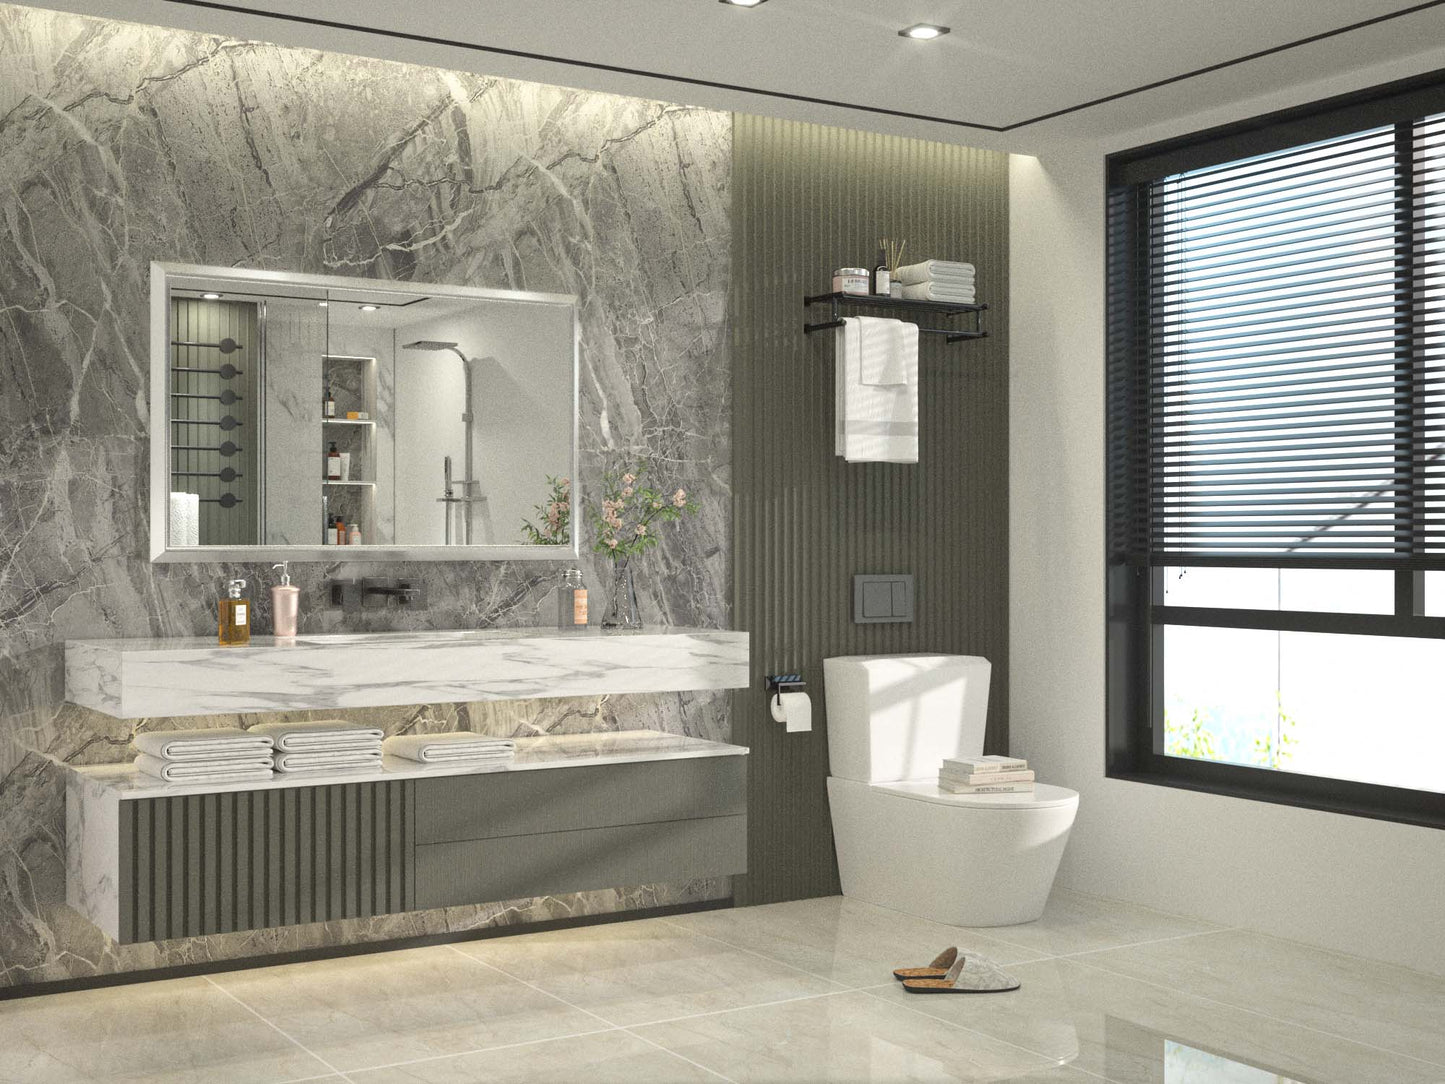 
                  
                    48 x 30 Inch | PILOCOS Retro Farmhouse Decorative Mirror for Bathroom with Beveled Metal Frame
                  
                